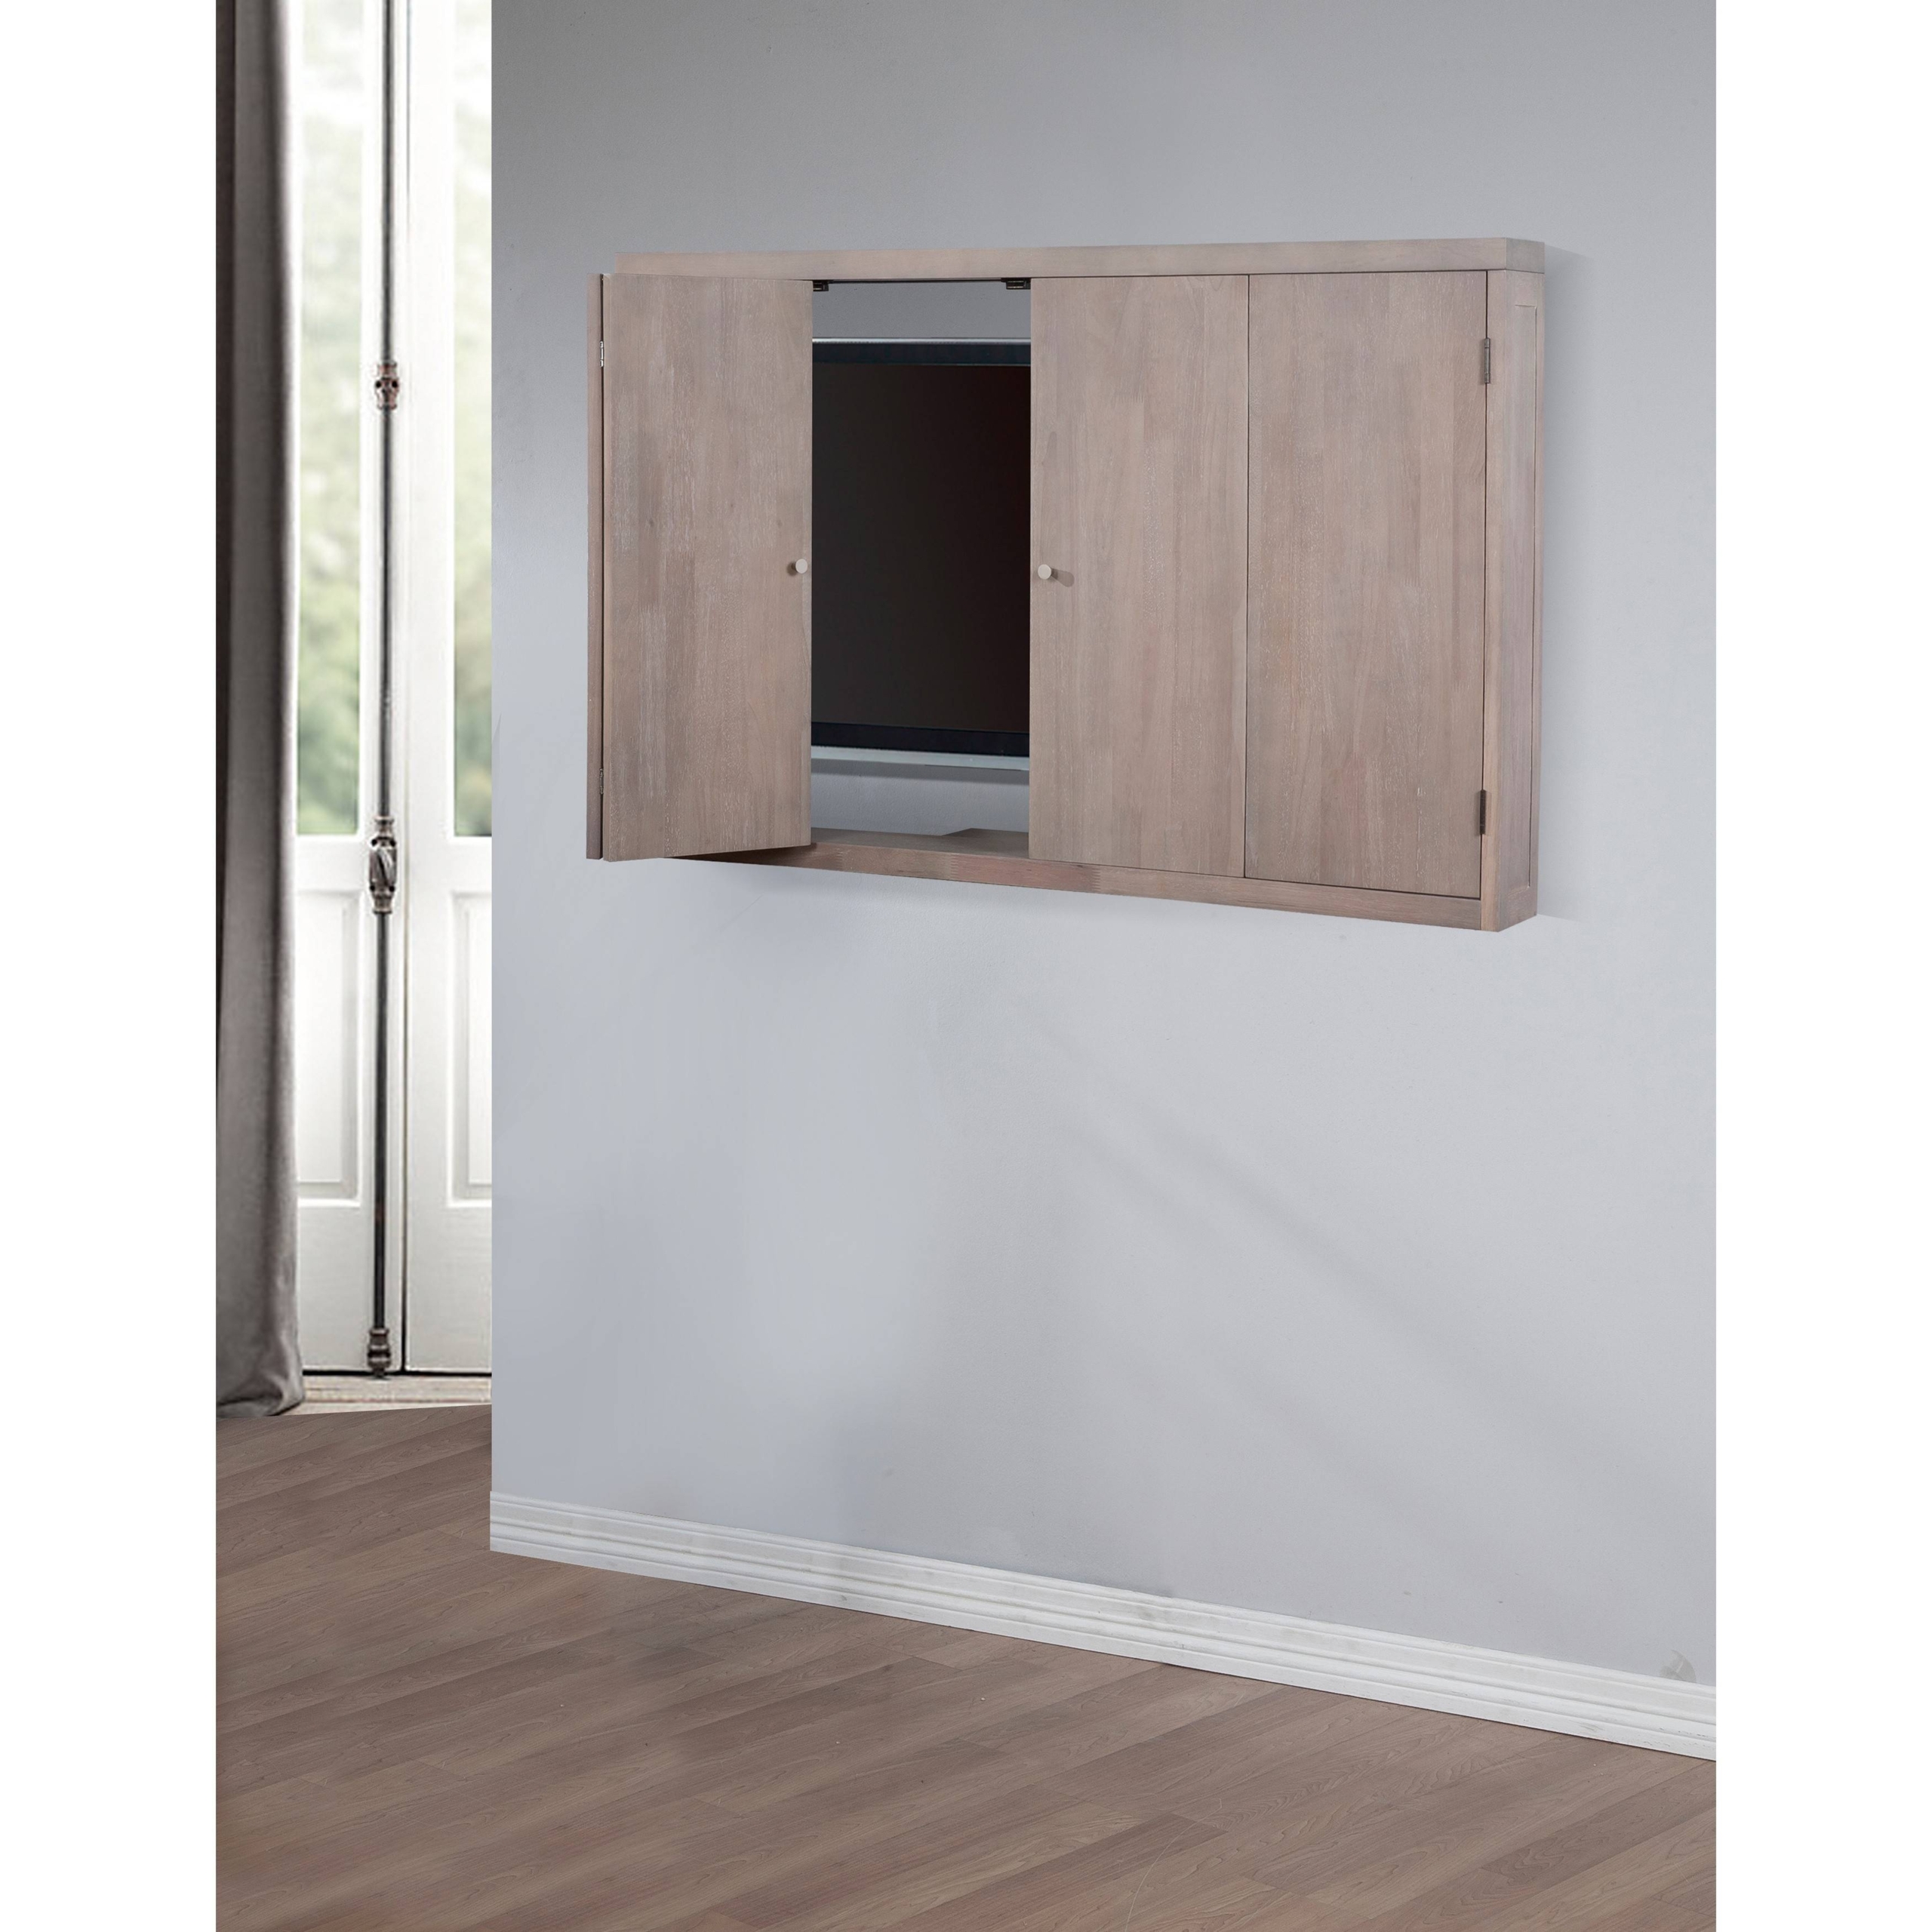 Studio Dove Finish Wall Mount Tv Cabinet Stand Media Console Shelf Storage Flat